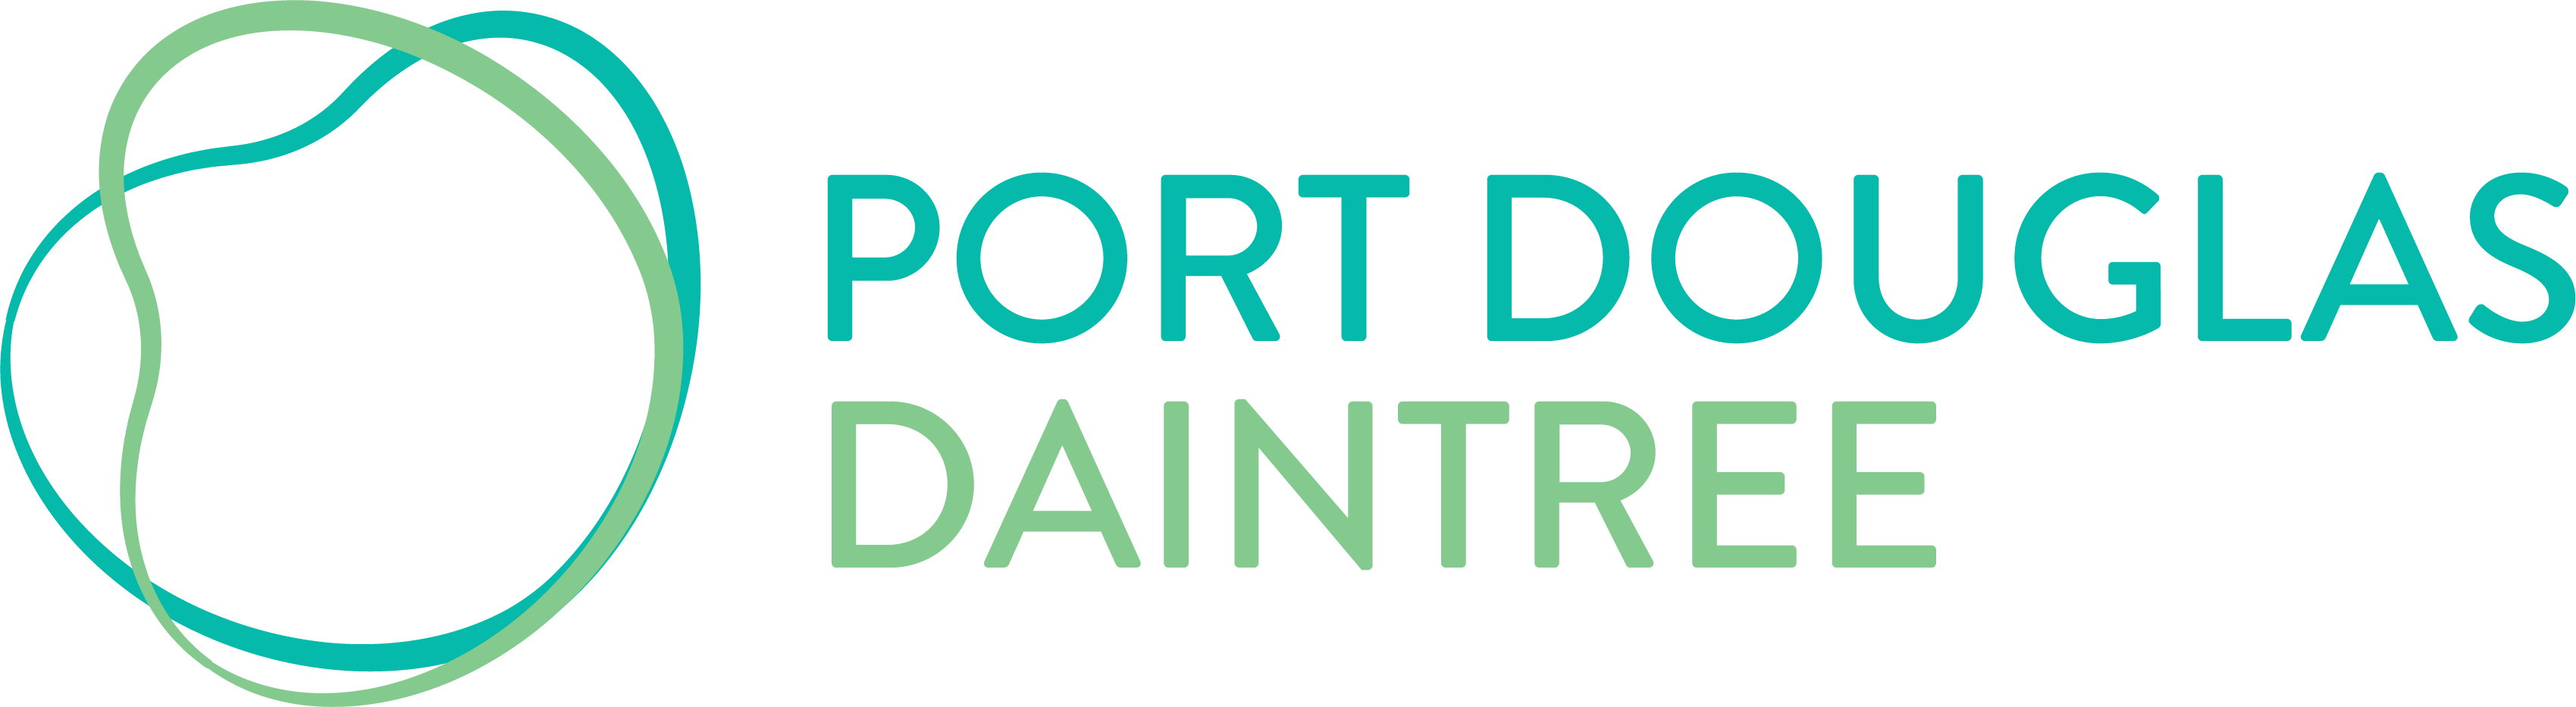 daintree rainforest tour from port douglas